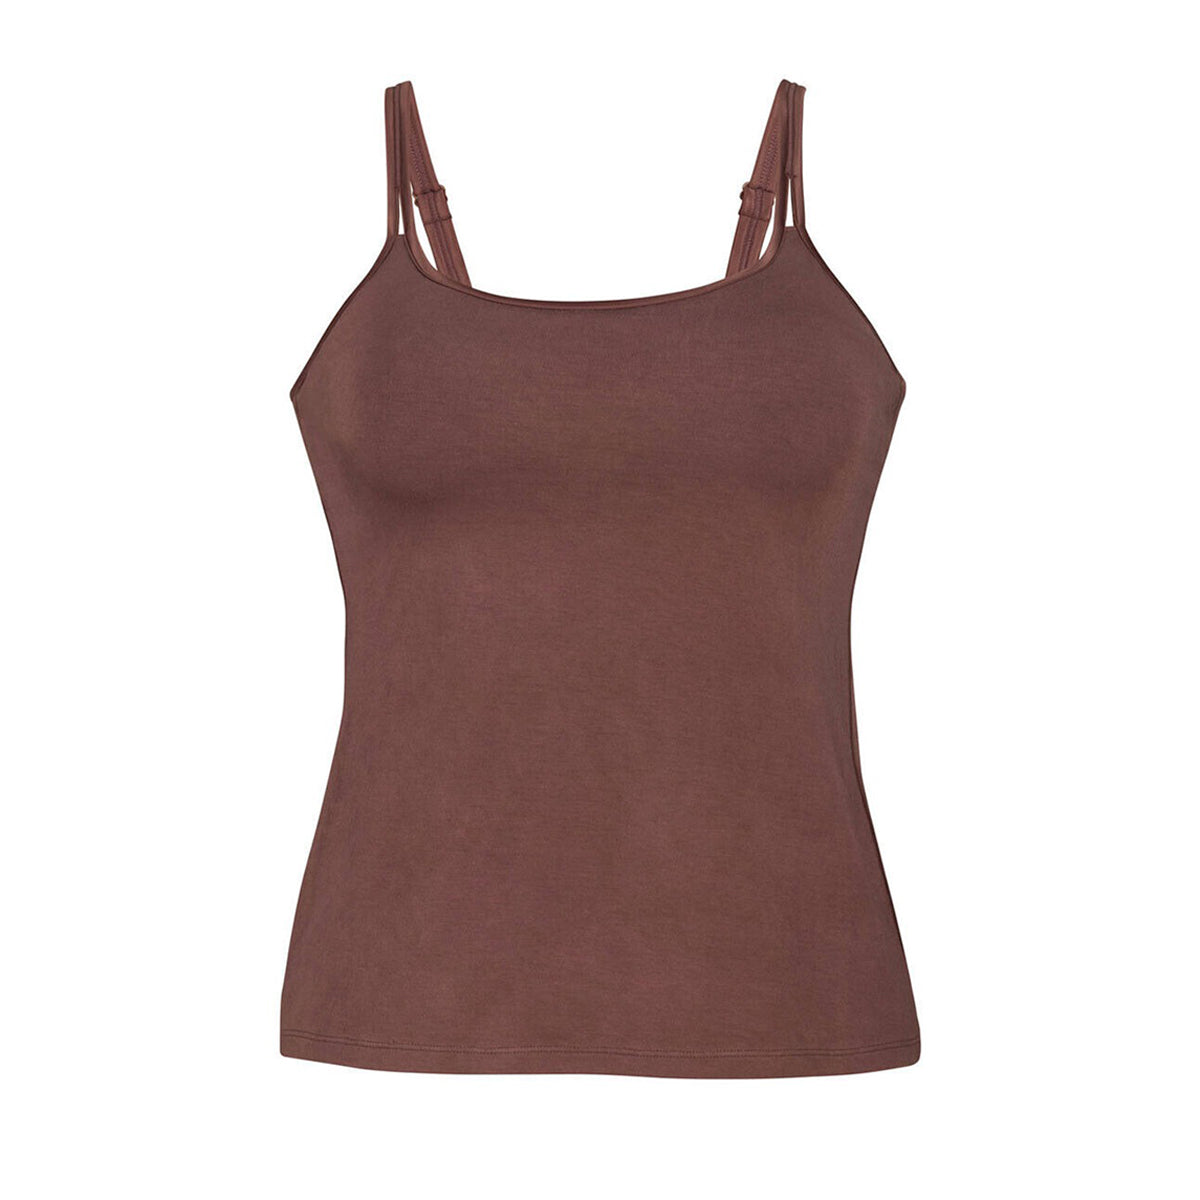 Pact womens Women's Organic Cotton Camisole Tank Top With Built-in Shelf  Bra Cami Shirt - ShopStyle